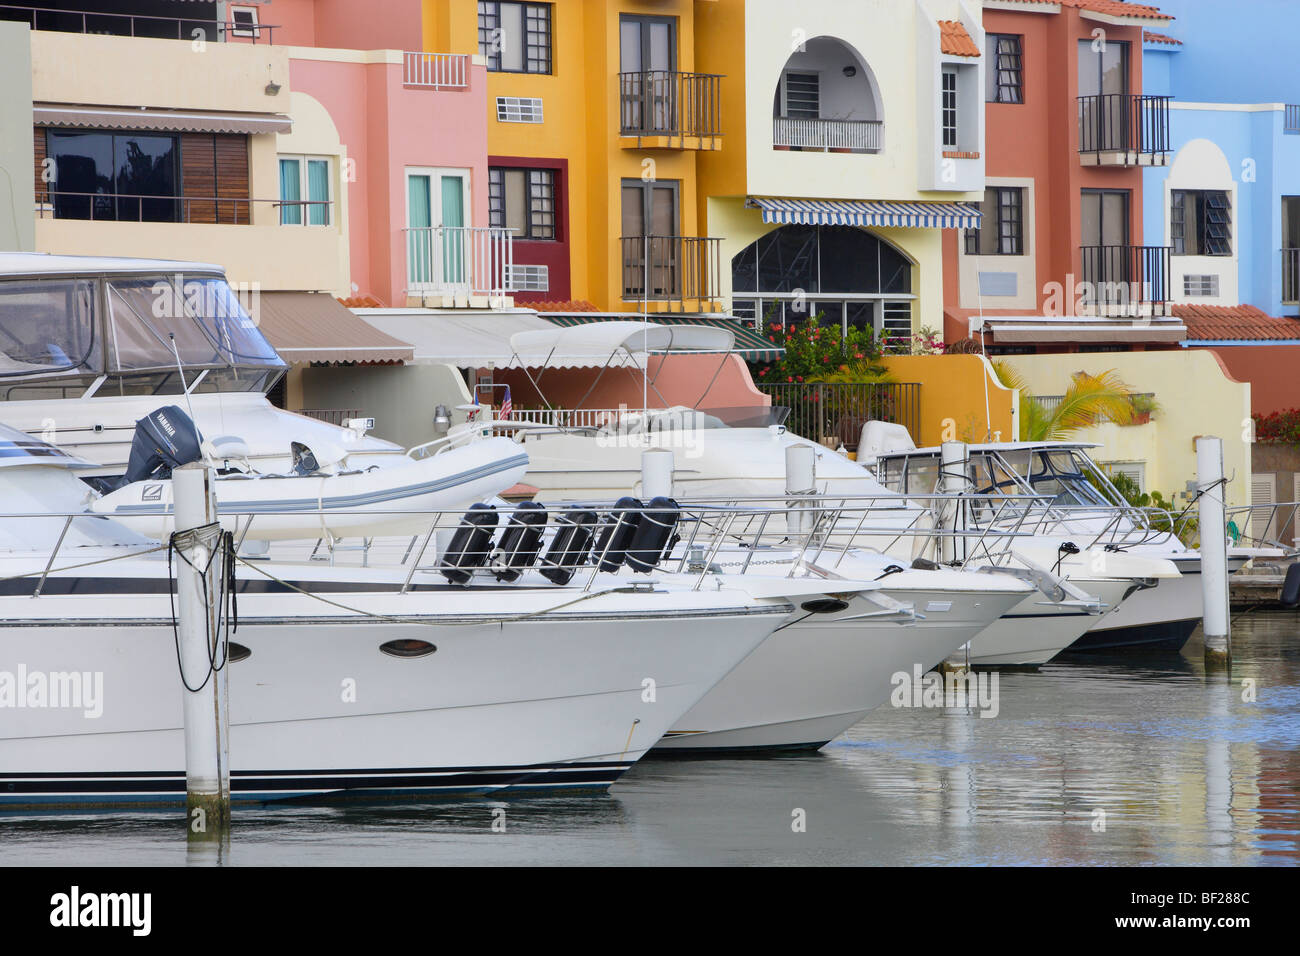 Boote sind in Amerika, Puerto Rico, Palmas del Mar Hafen vor der bunten Häusern, Palmas del Mar festgemacht Stockfoto